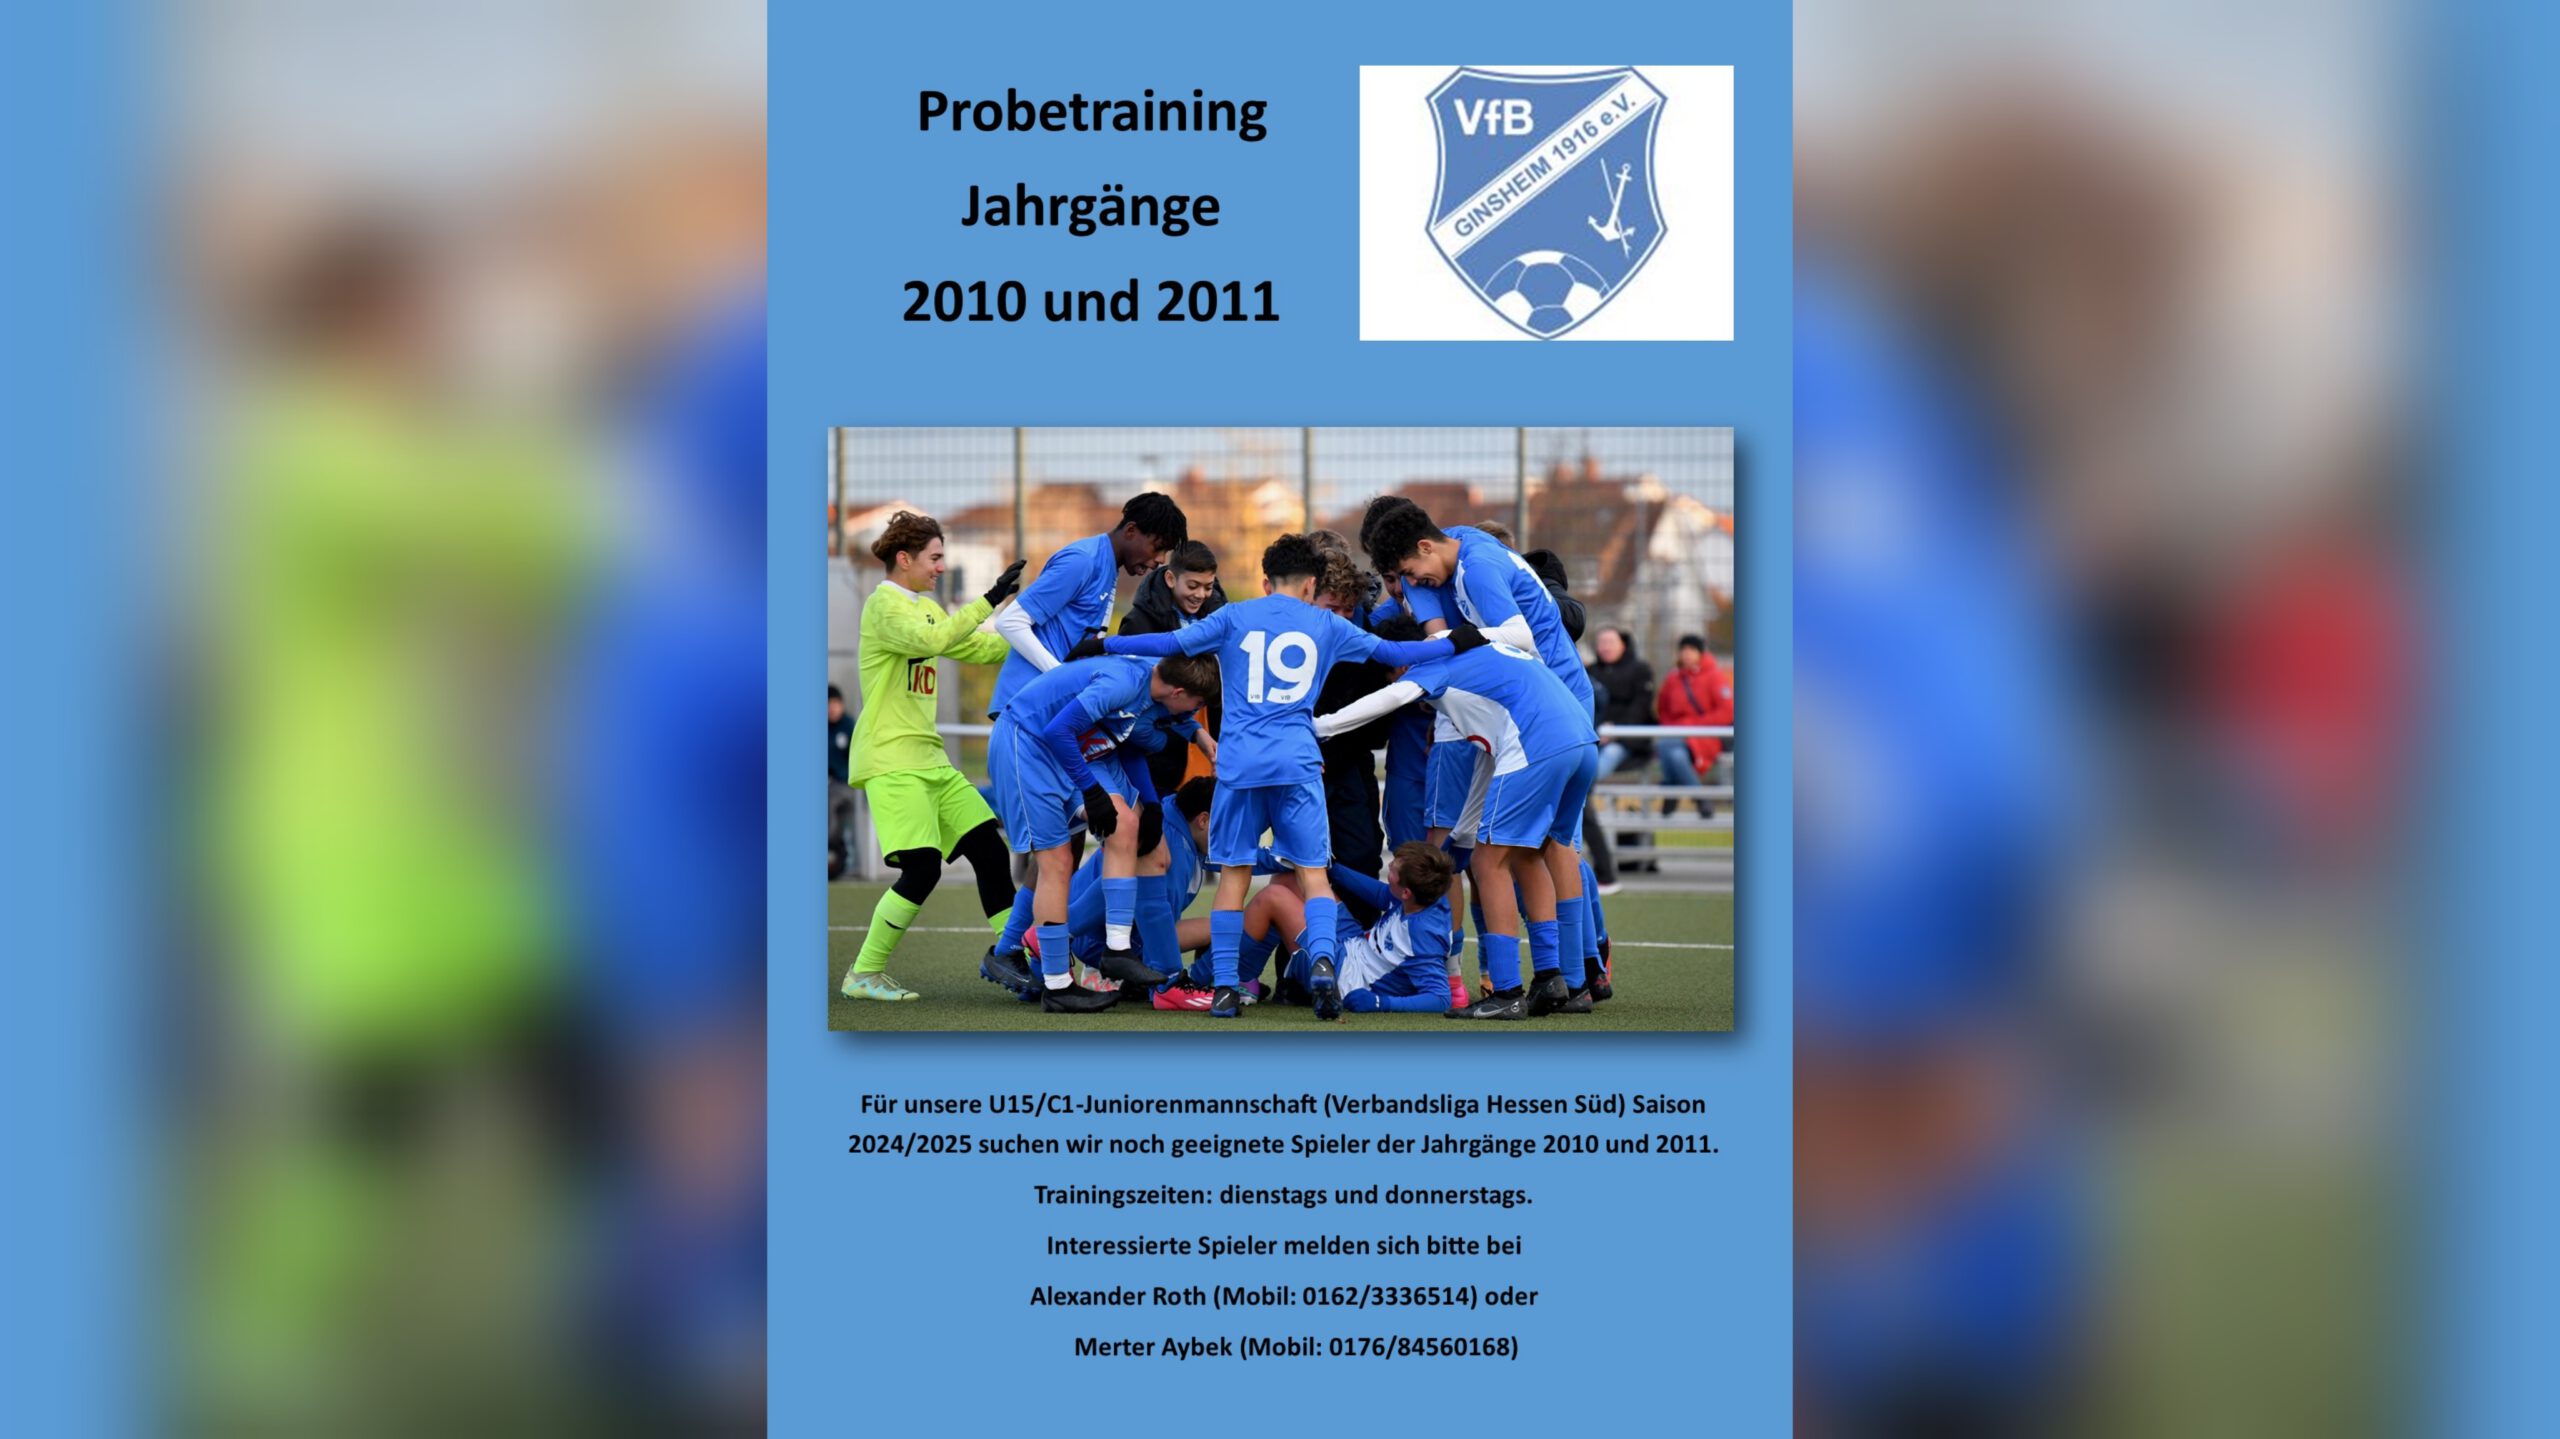 You are currently viewing Probetraining U15/C1 Verbandsliga Jahrgänge 2010/2011